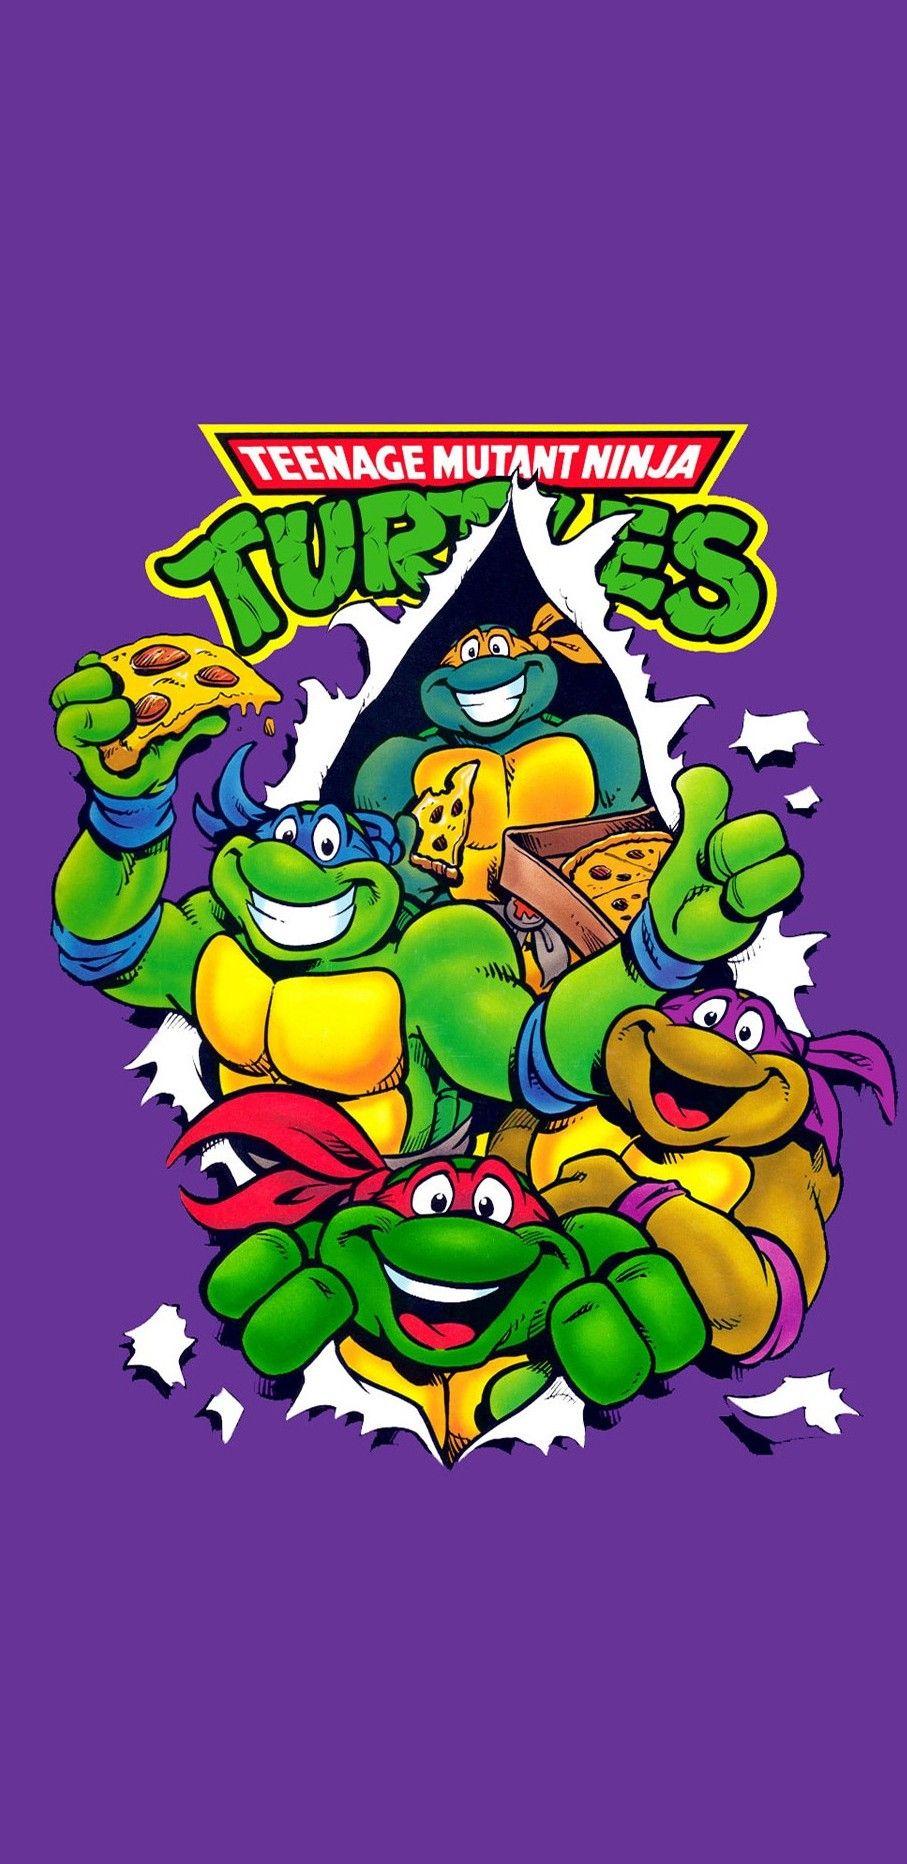 Free: Teenage Mutant Ninja Turtles Poster Wallpaper